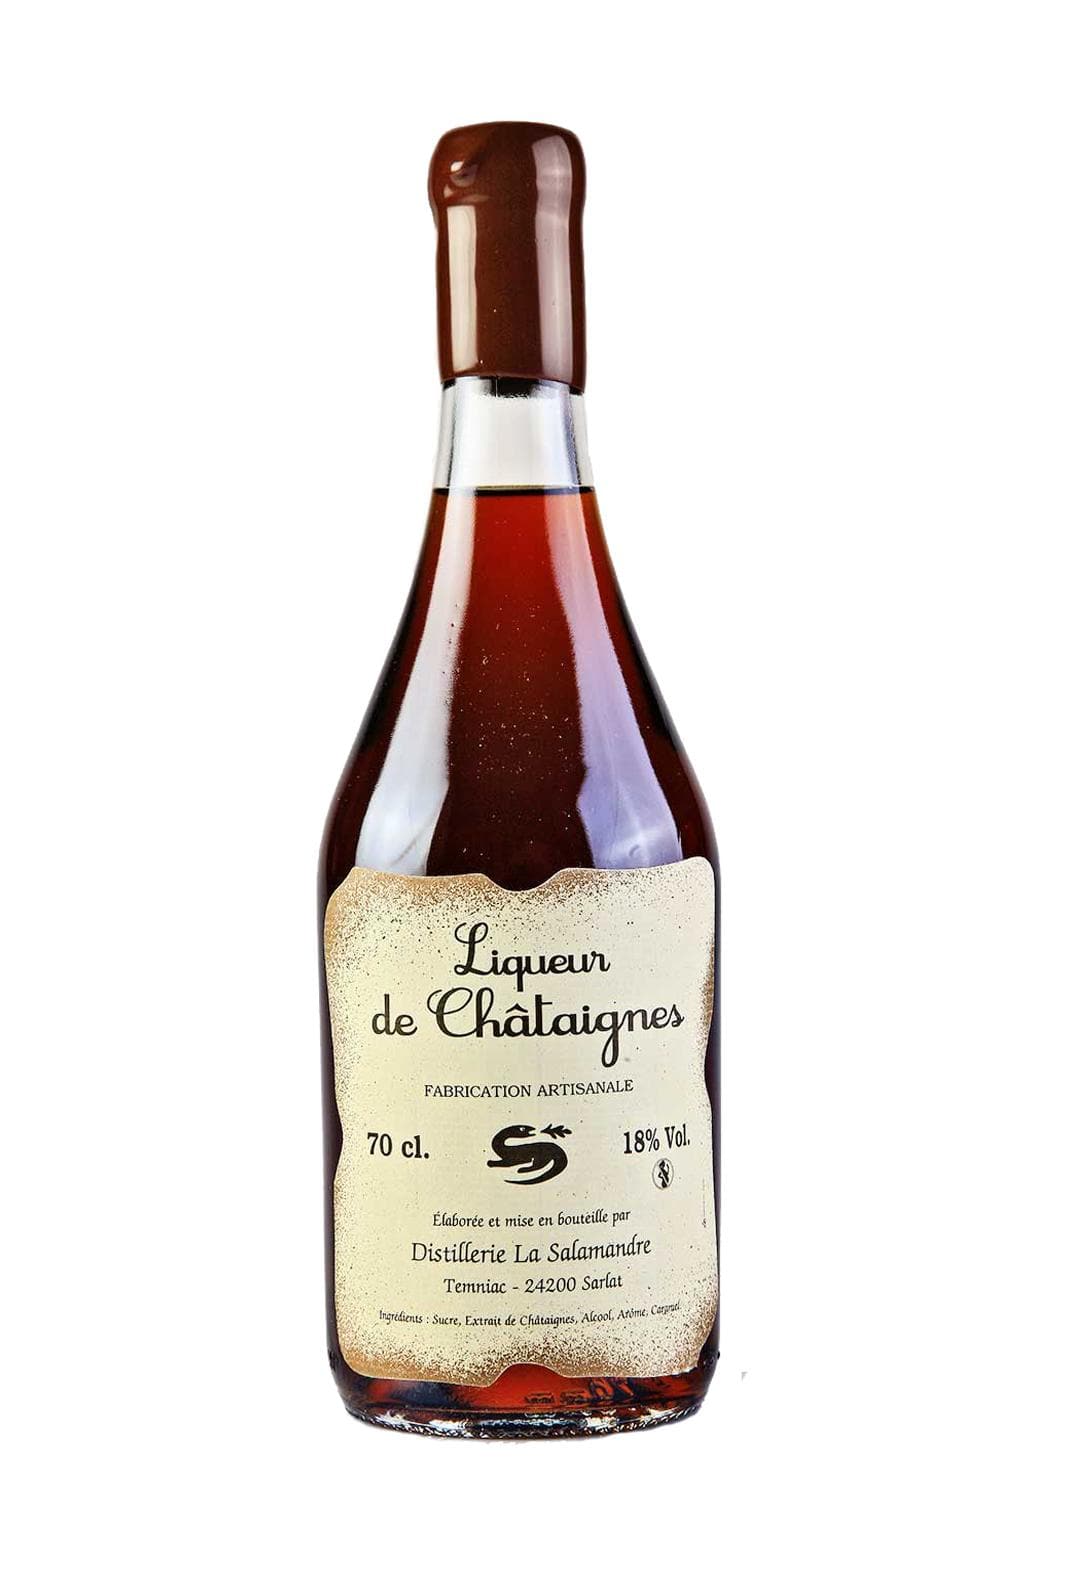 Salamandre Liqueur de Chataignes (Chestnut) 18% 700ml | Liquor & Spirits | Shop online at Spirits of France